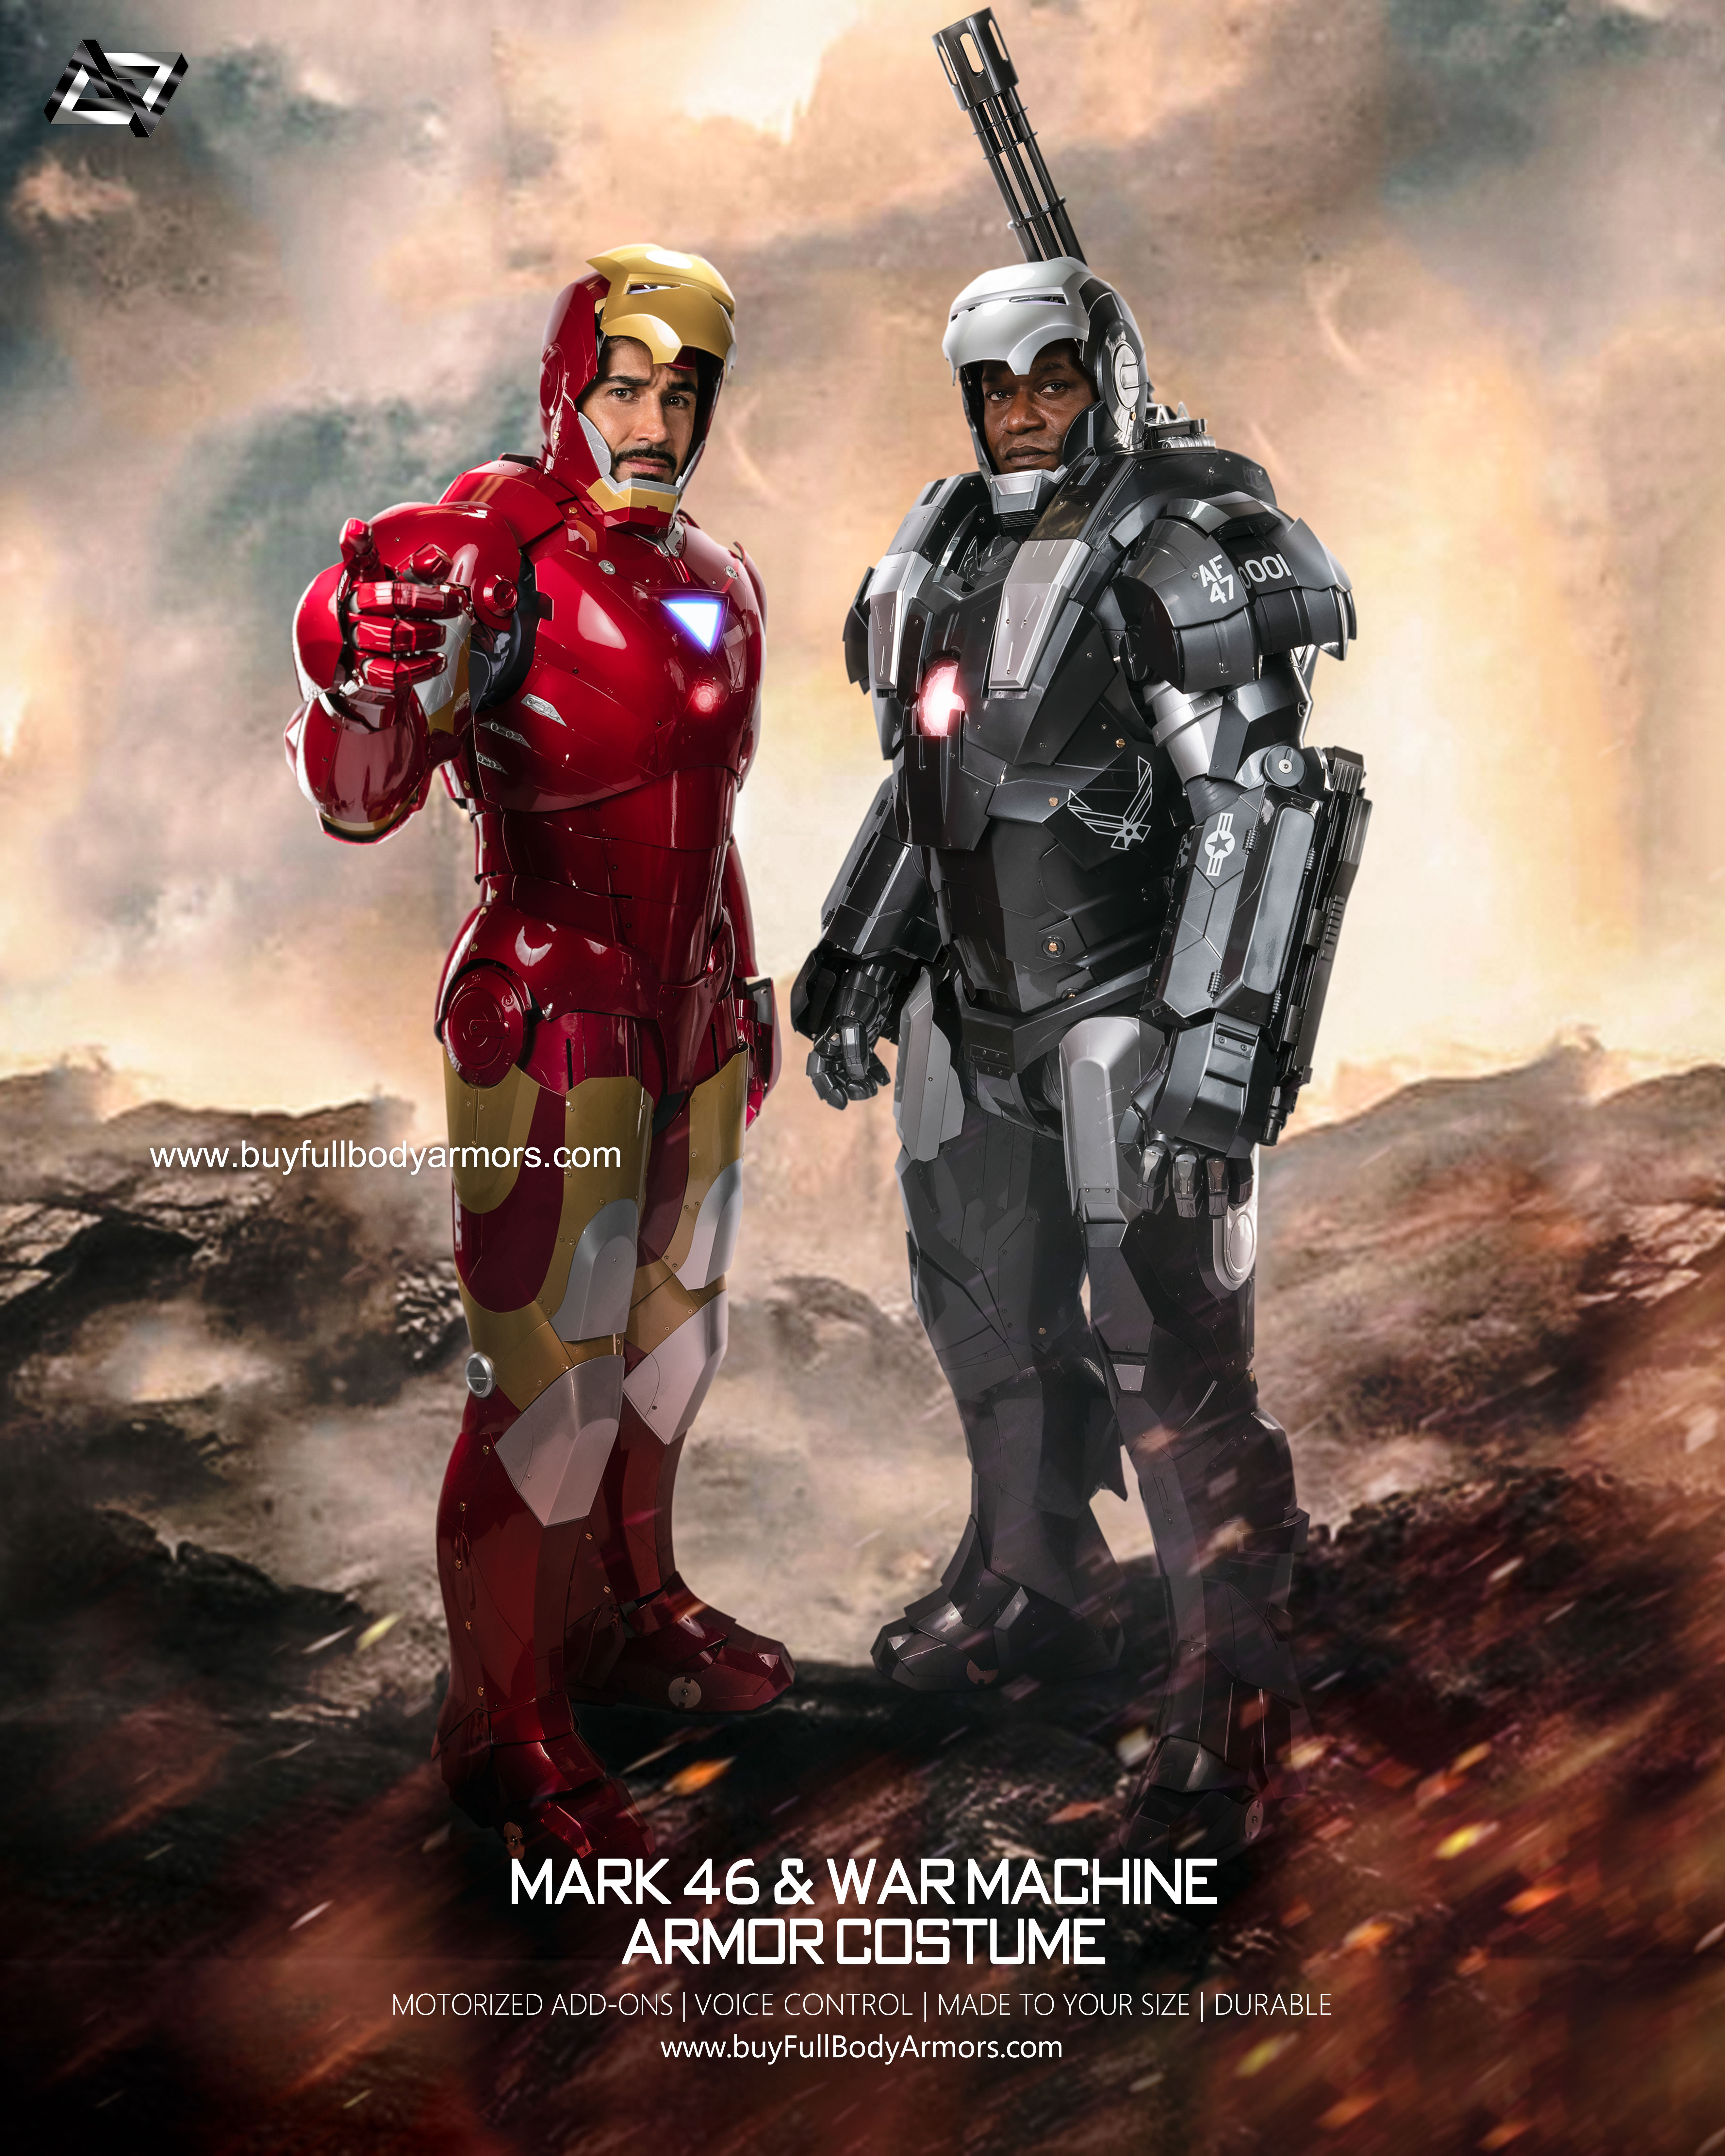 customized iron man armor costume mark3 war machine armor costume 1